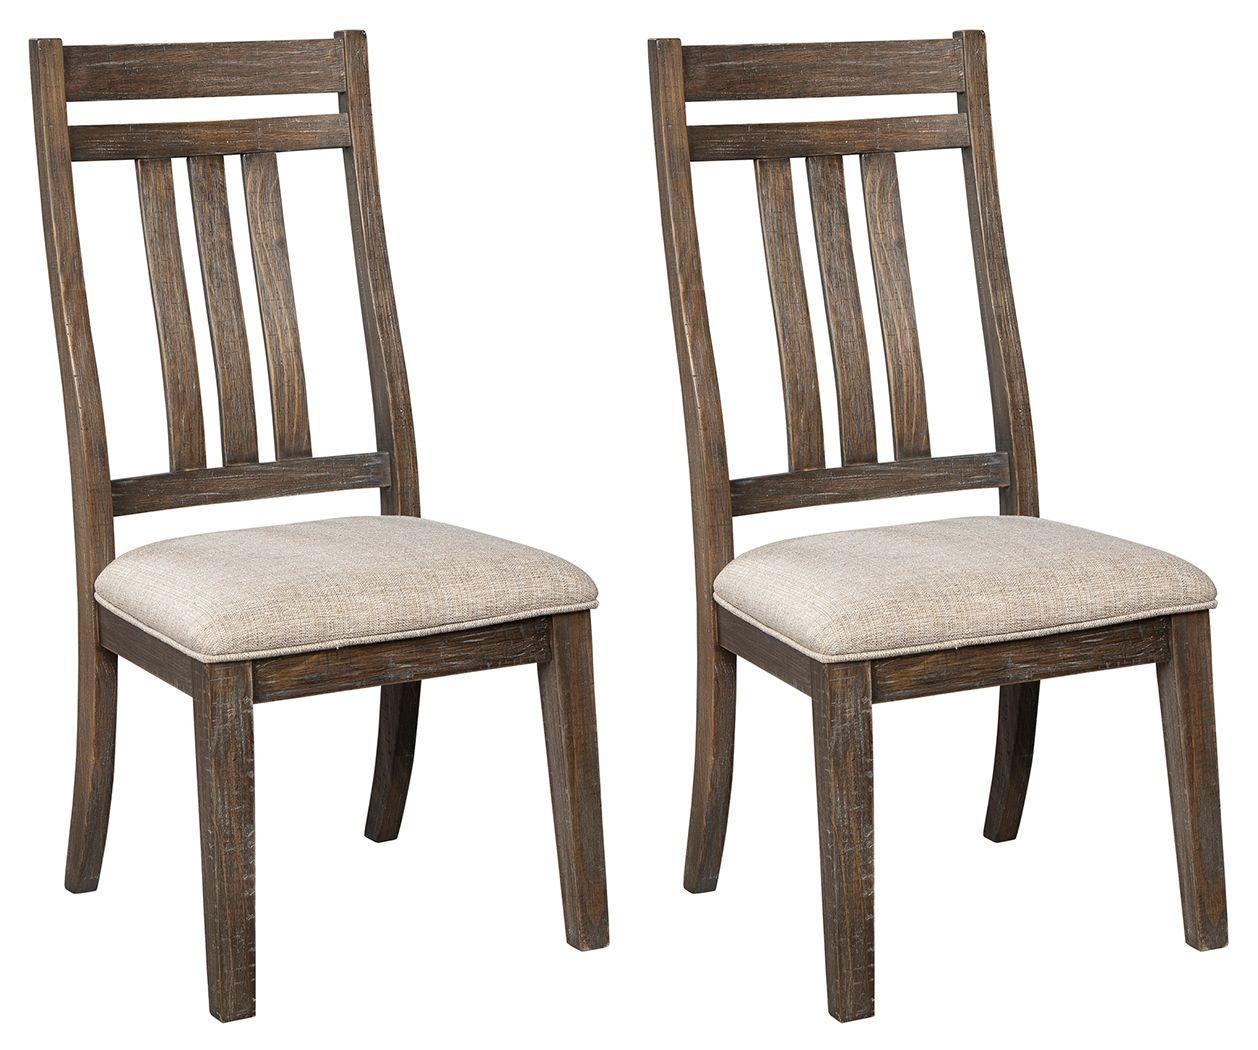 Ashley Furniture - Wyndahl - Rustic Brown - Dining Uph Side Chair (Set of 2) - Slatback - 5th Avenue Furniture